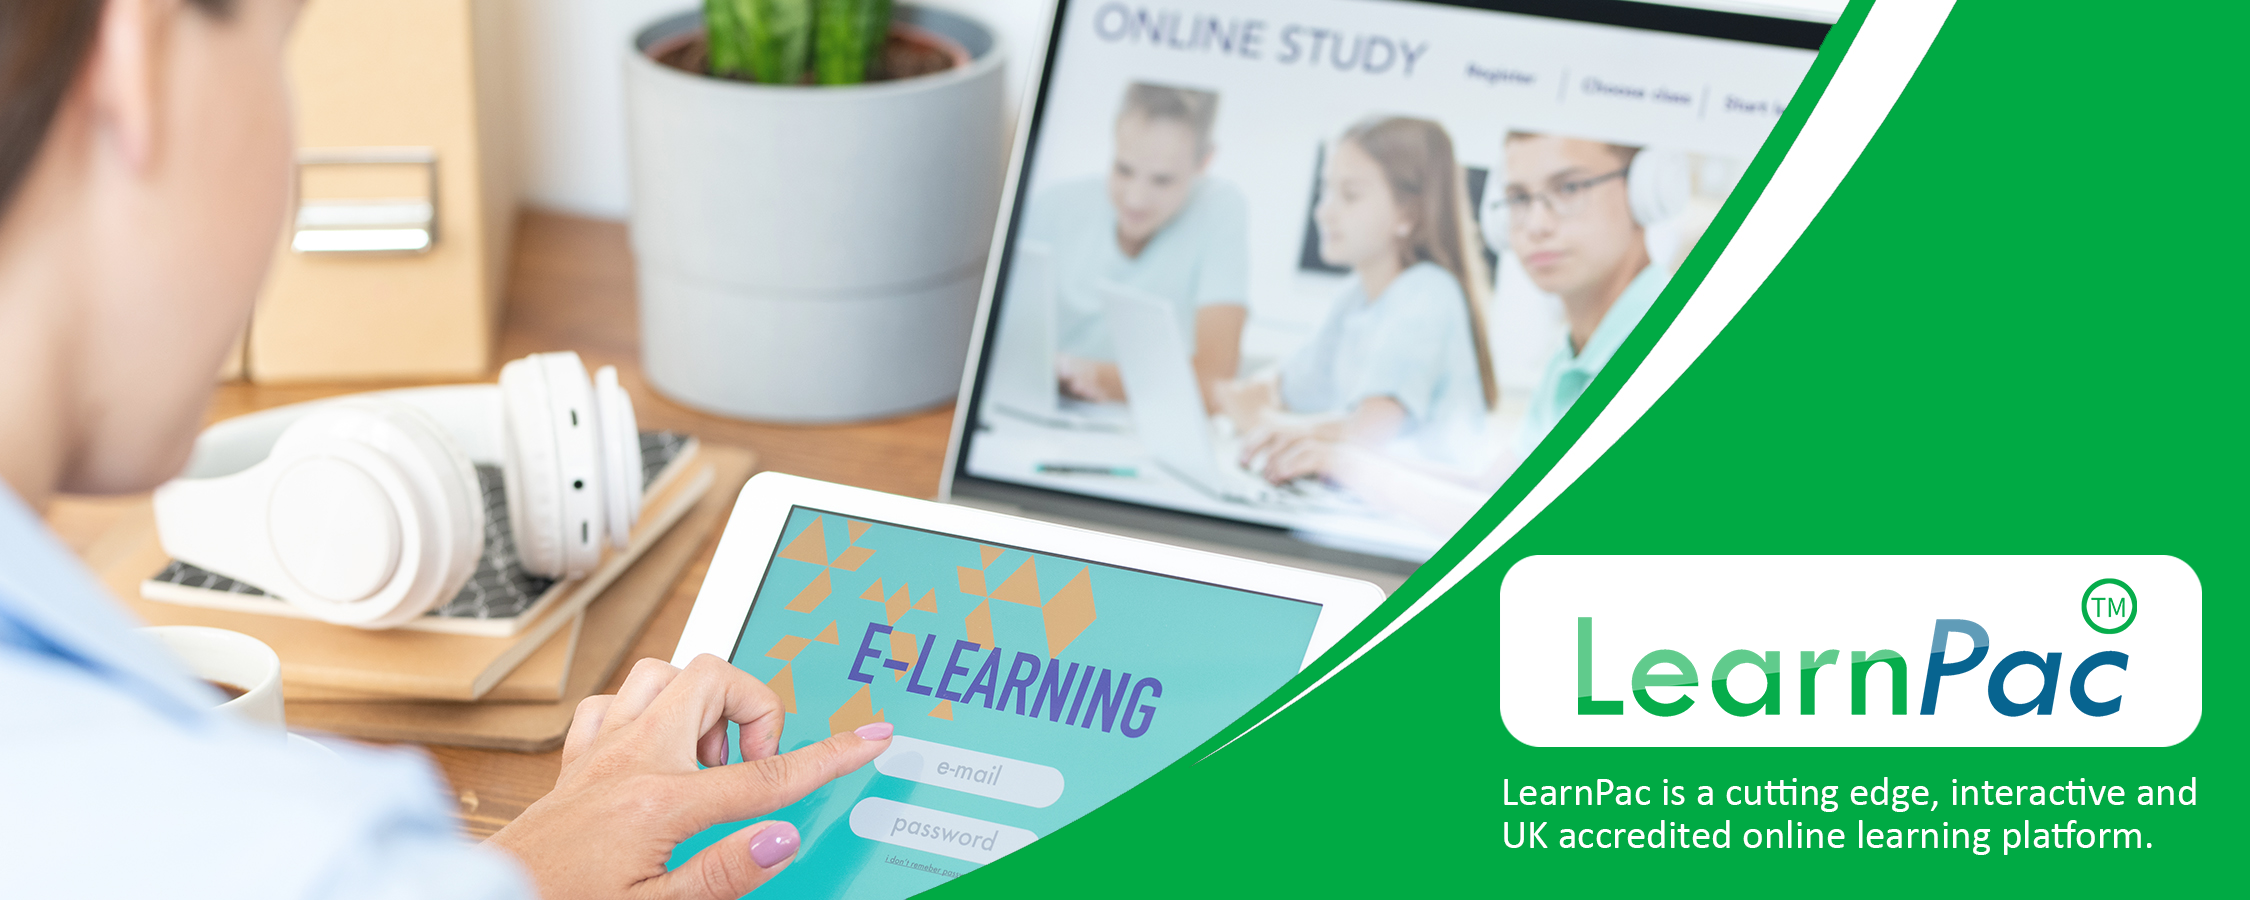 Life Coaching Essentials Training - Online Learning Courses - E-Learning Courses - LearnPac Systems UK -